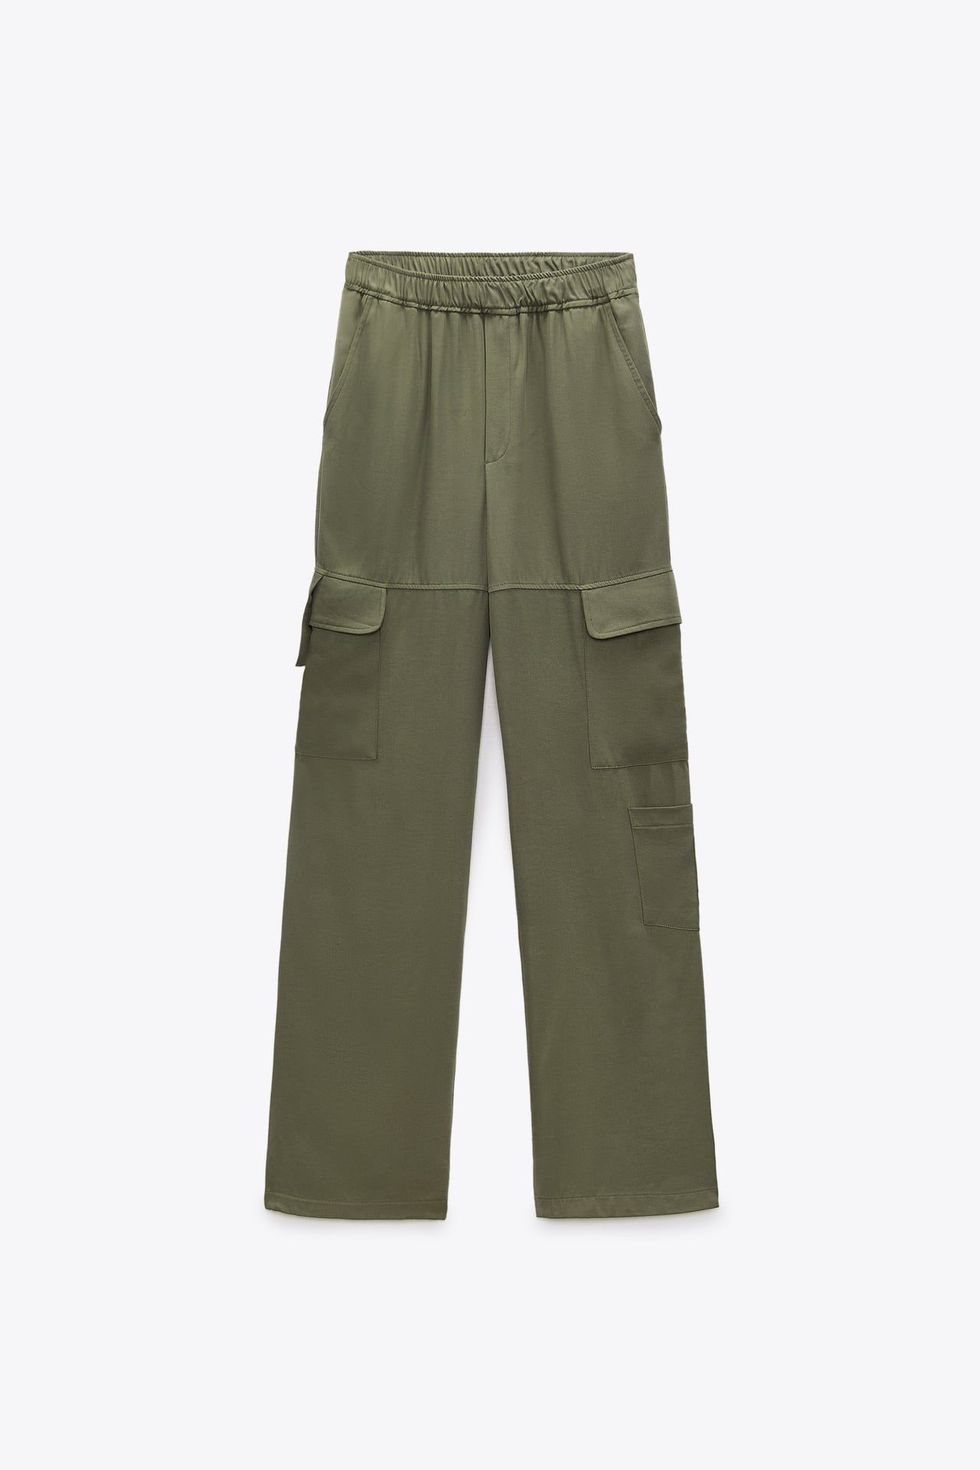 Zara Satin Cargo Pants ($40)  Cargo trousers, Cargo trousers